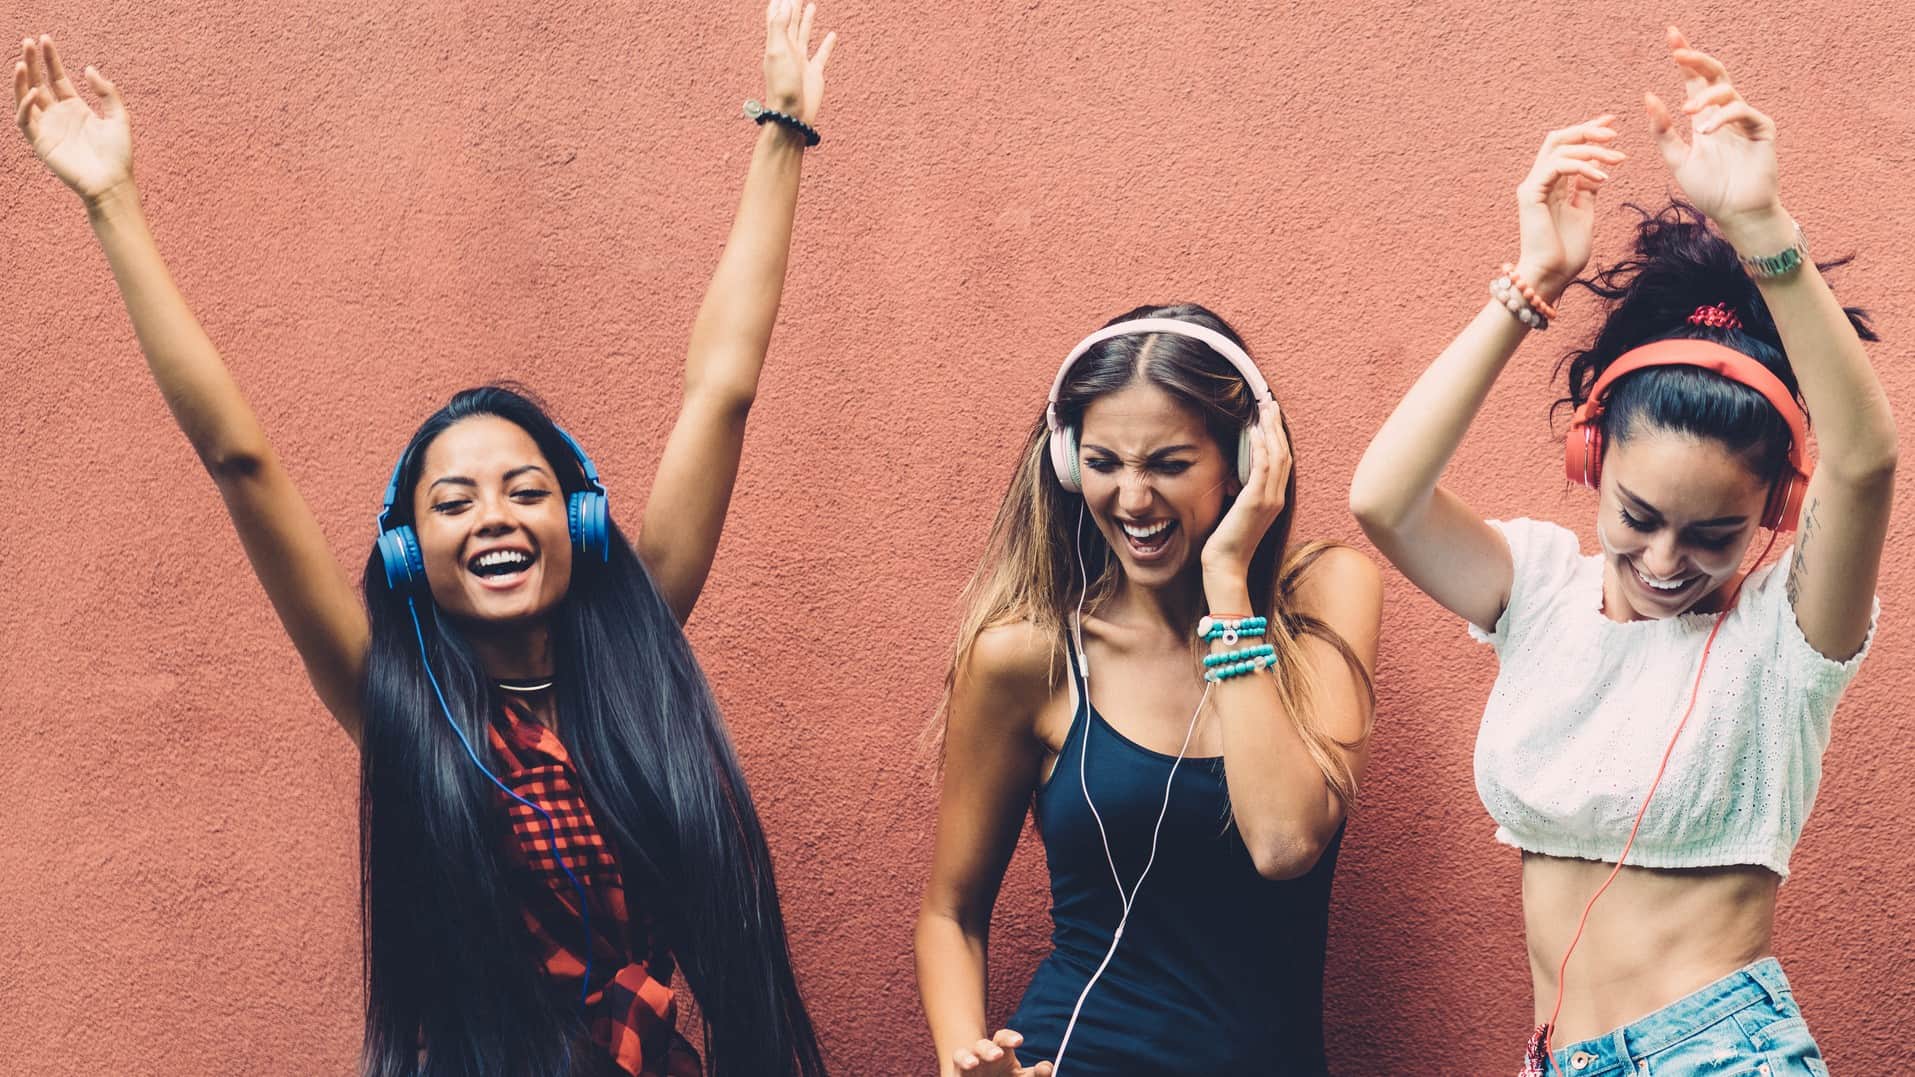 The happy young women wearing headphones dance to music